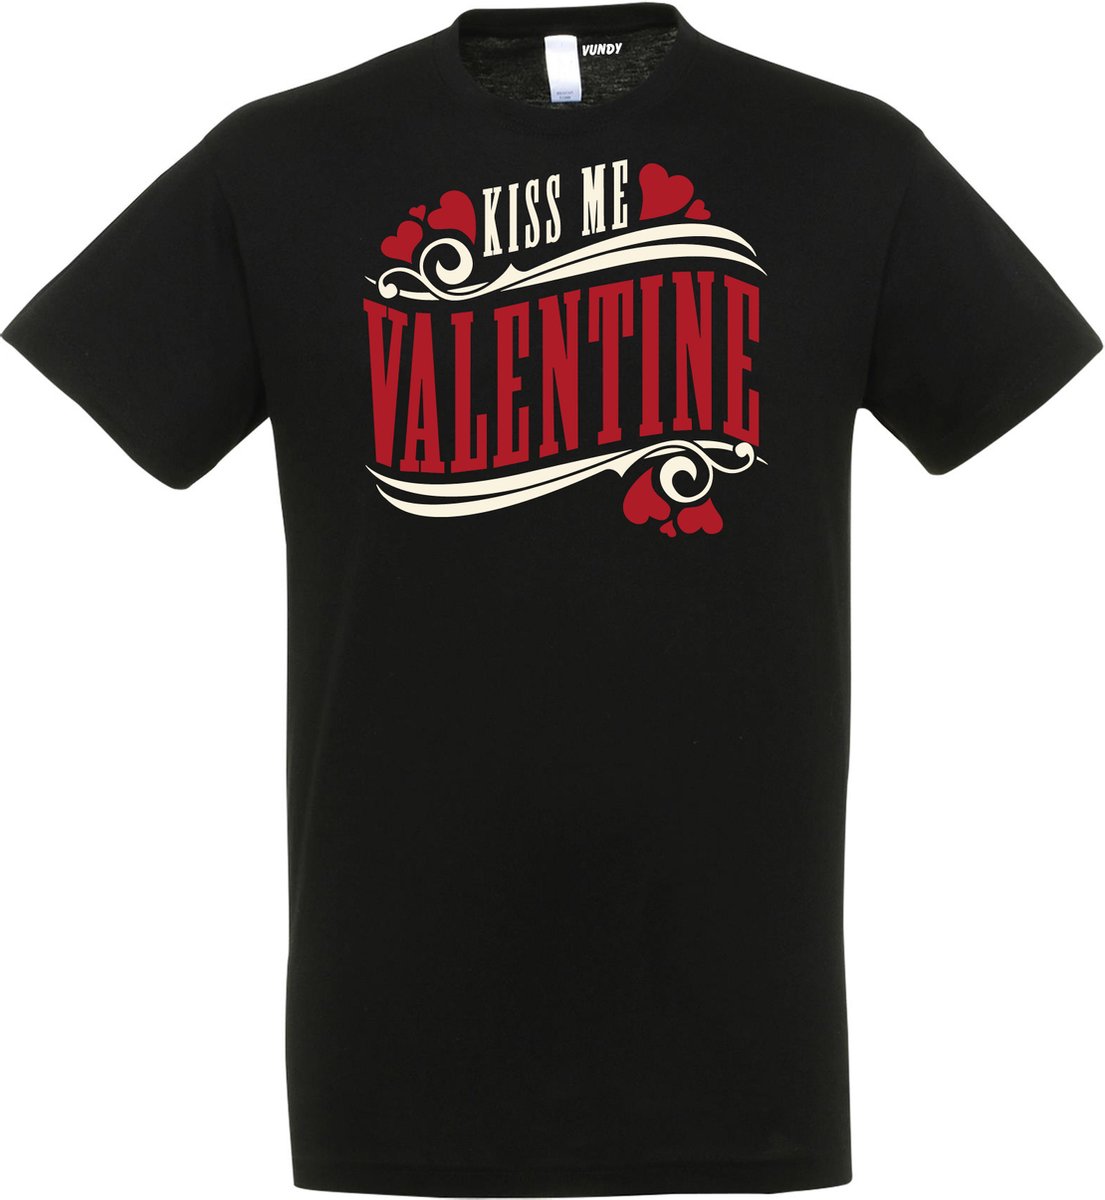 T-shirt Kiss Me Valentine | valentijn cadeautje voor hem haar | valentijn | valentijnsdag cadeau | Zwart | maat XL